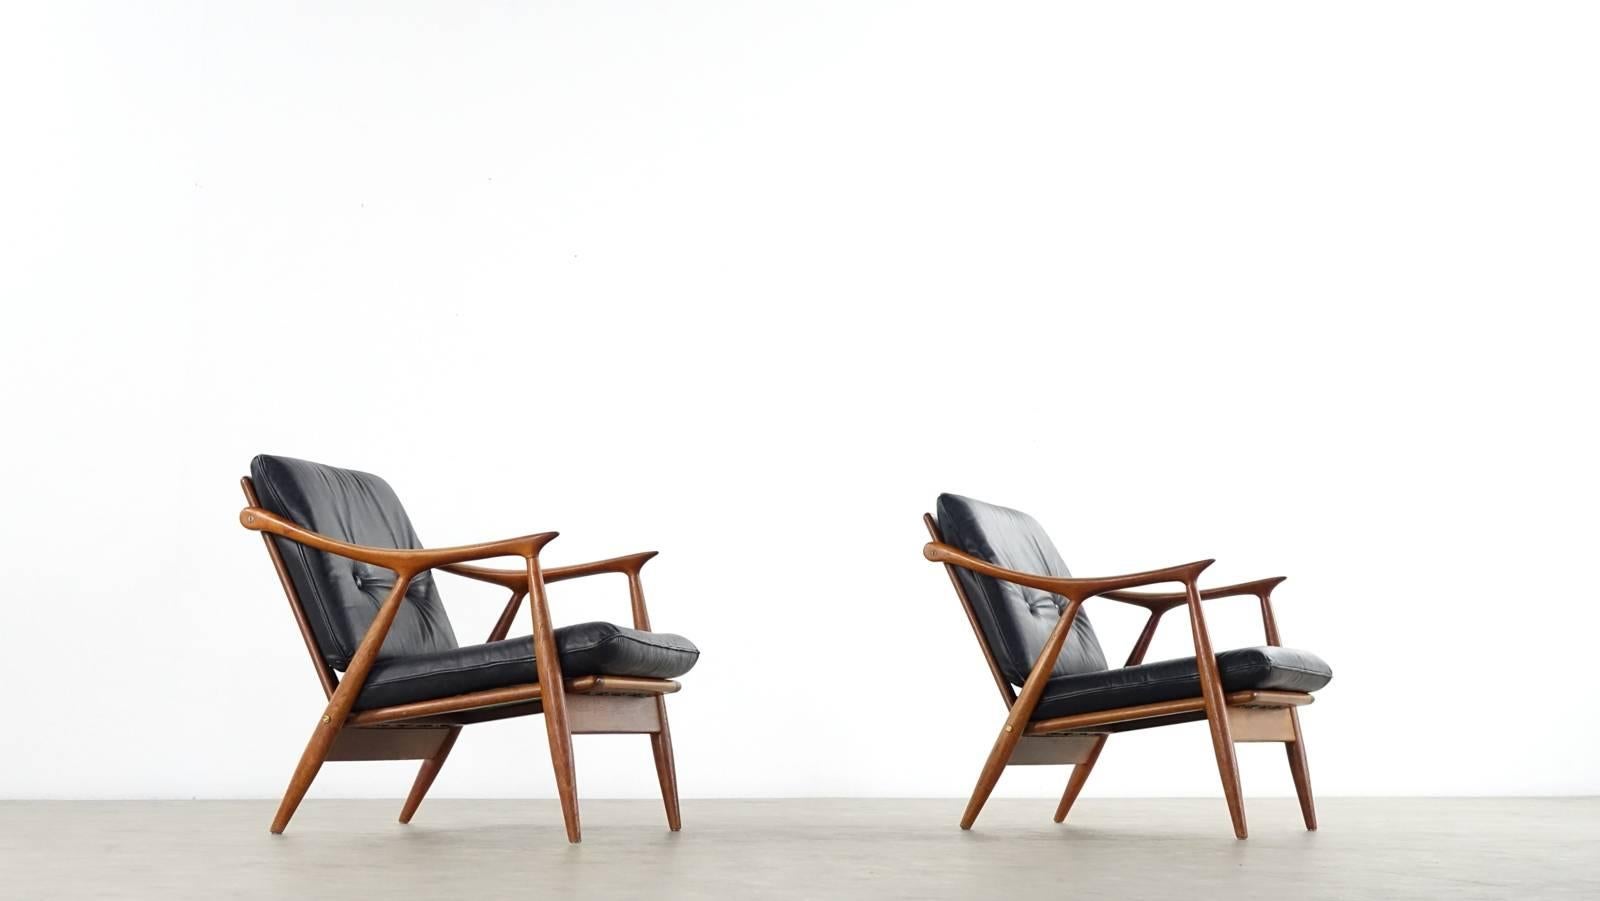 A pair of original Fredrik Kayser lounge chair for Vatne Møbelfabrik made in Norway.

